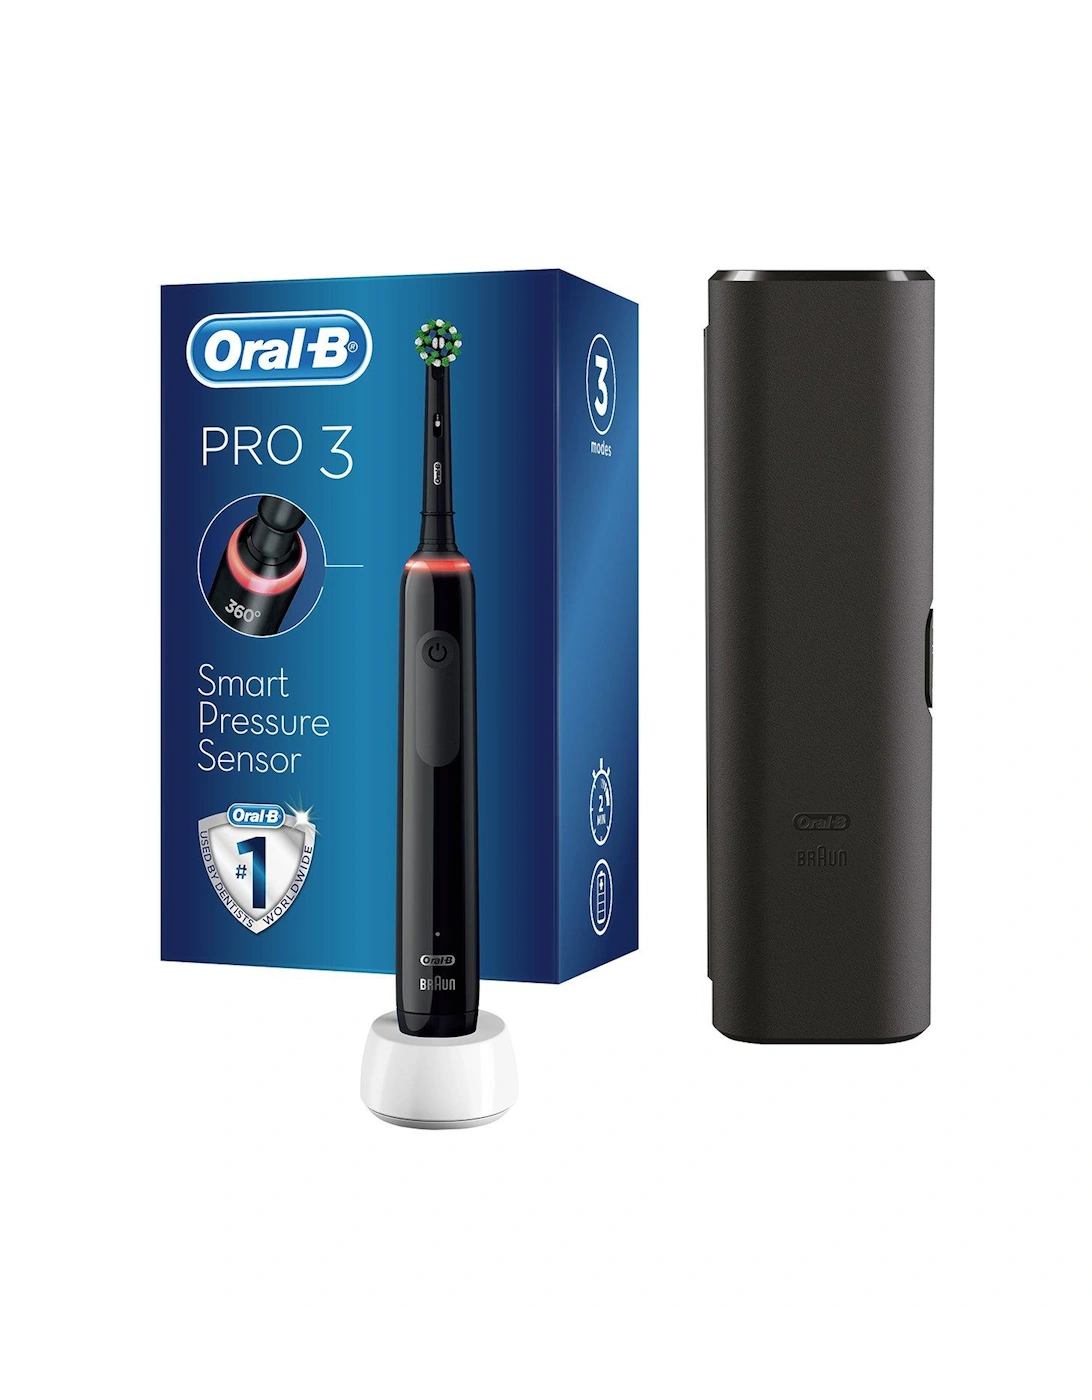 Oral-B Pro 3 - 3500 Cross Action - Black Electric Toothbrush Designed By Braun + Bonus Travel Case, 3 of 2